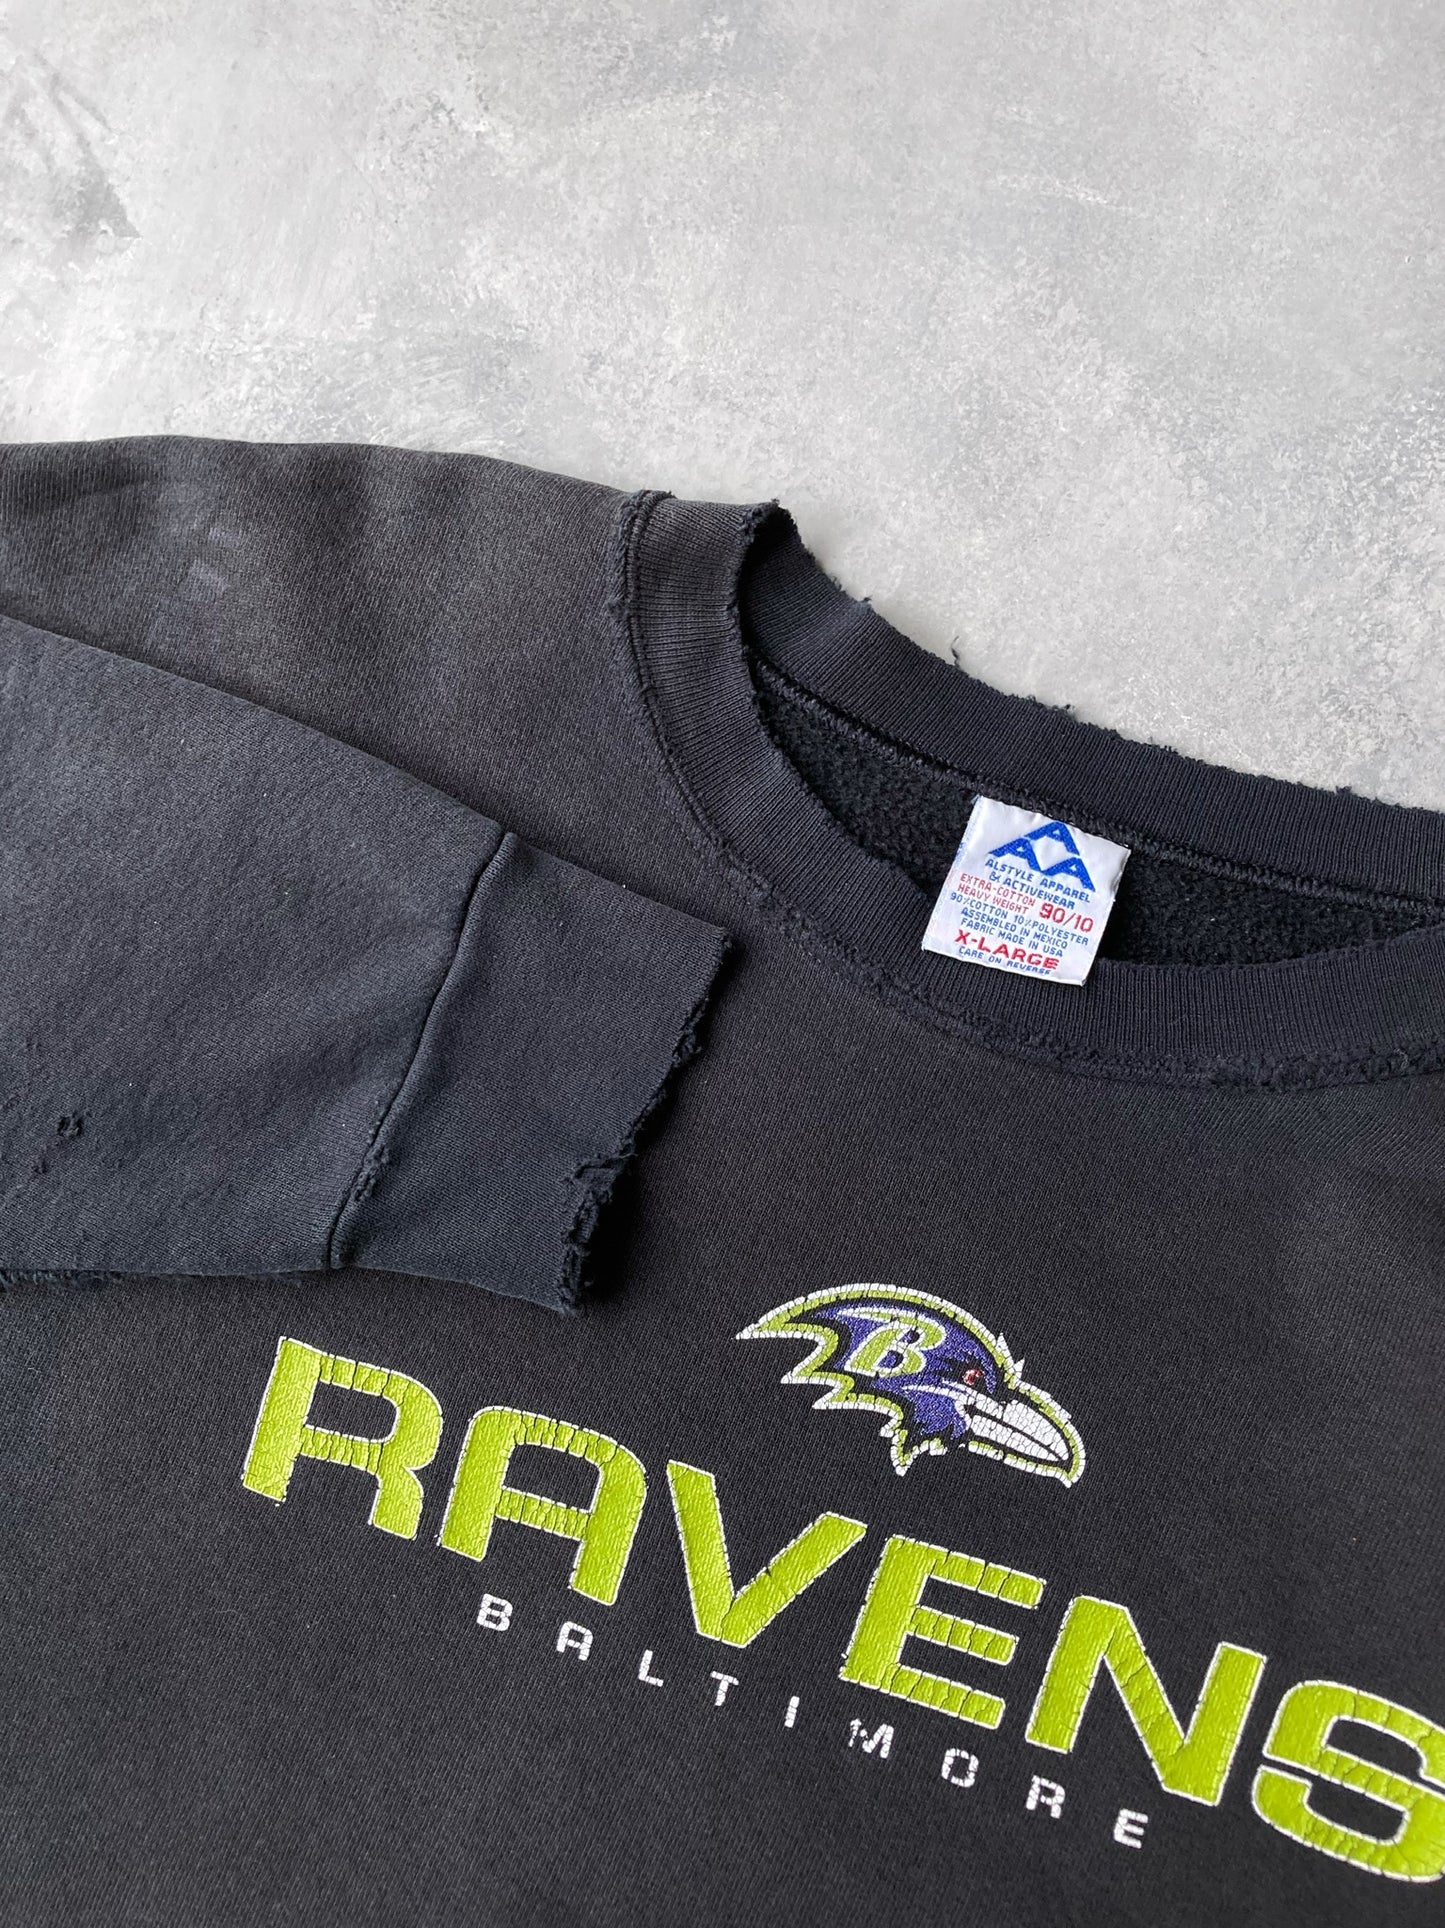 Distressed Baltimore Ravens Crewneck 90's - XL